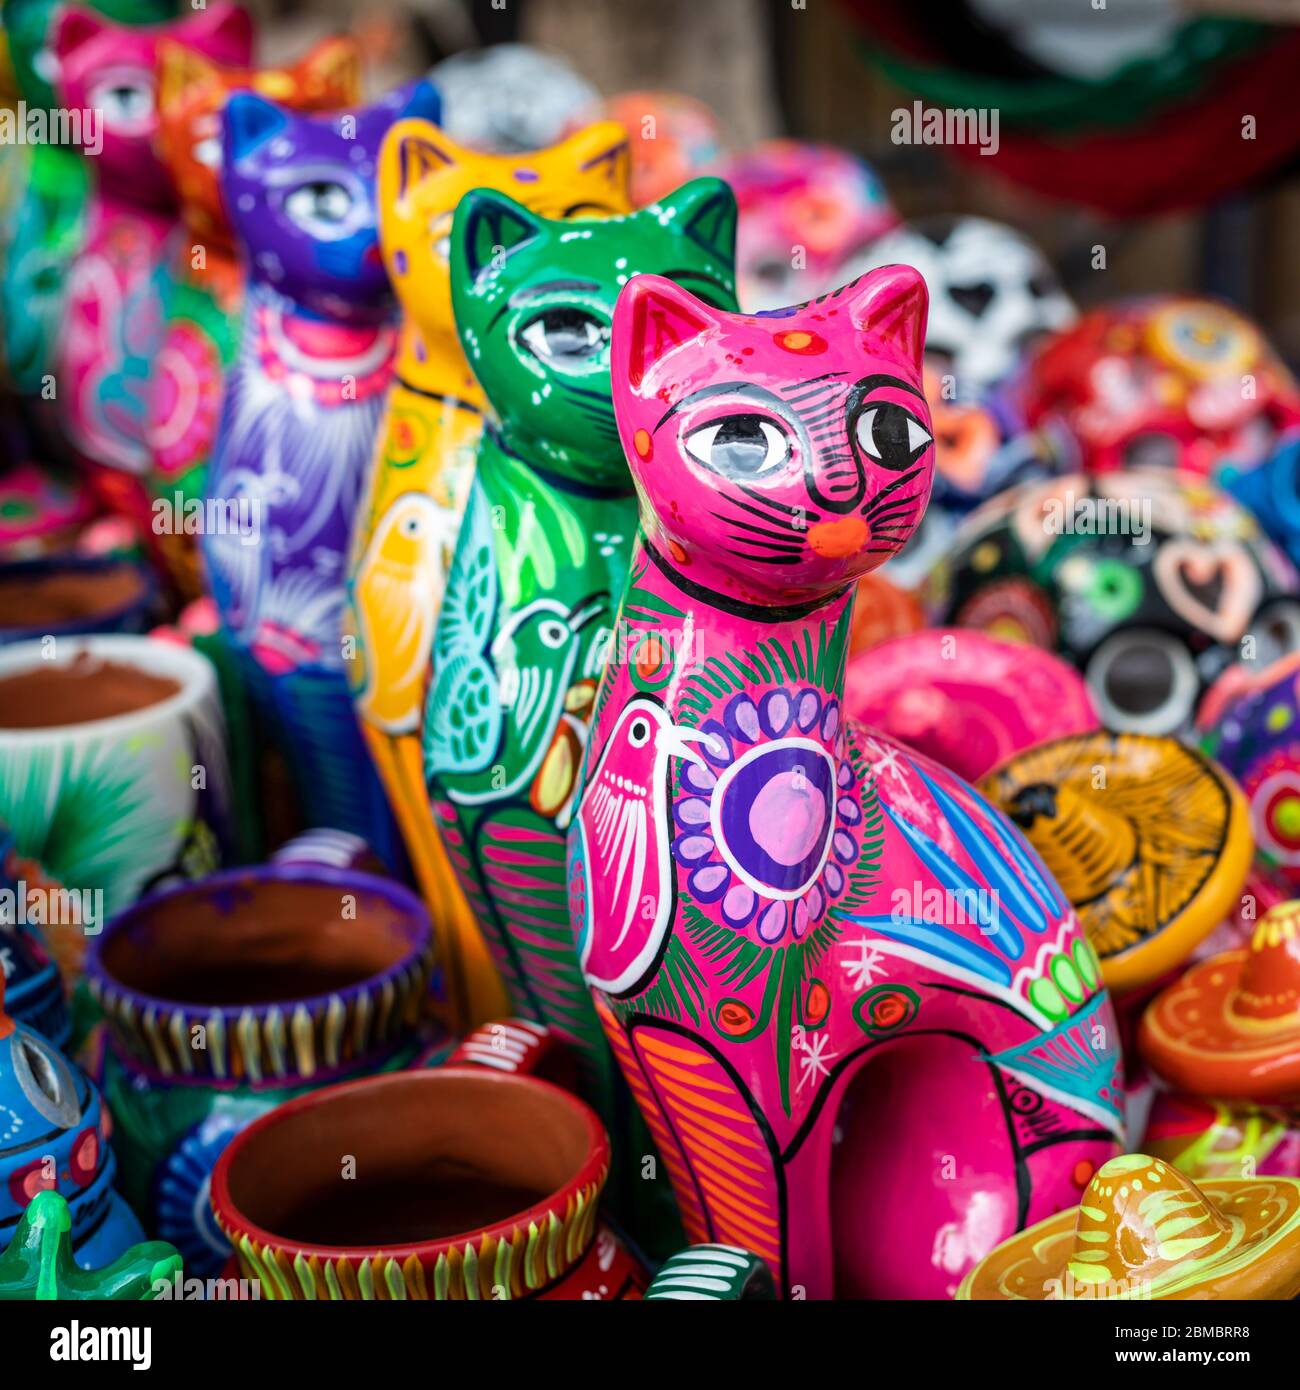 Handpainted ceramic cats in the Tlaquepaque market, Jalisco, Mexico. Stock Photo